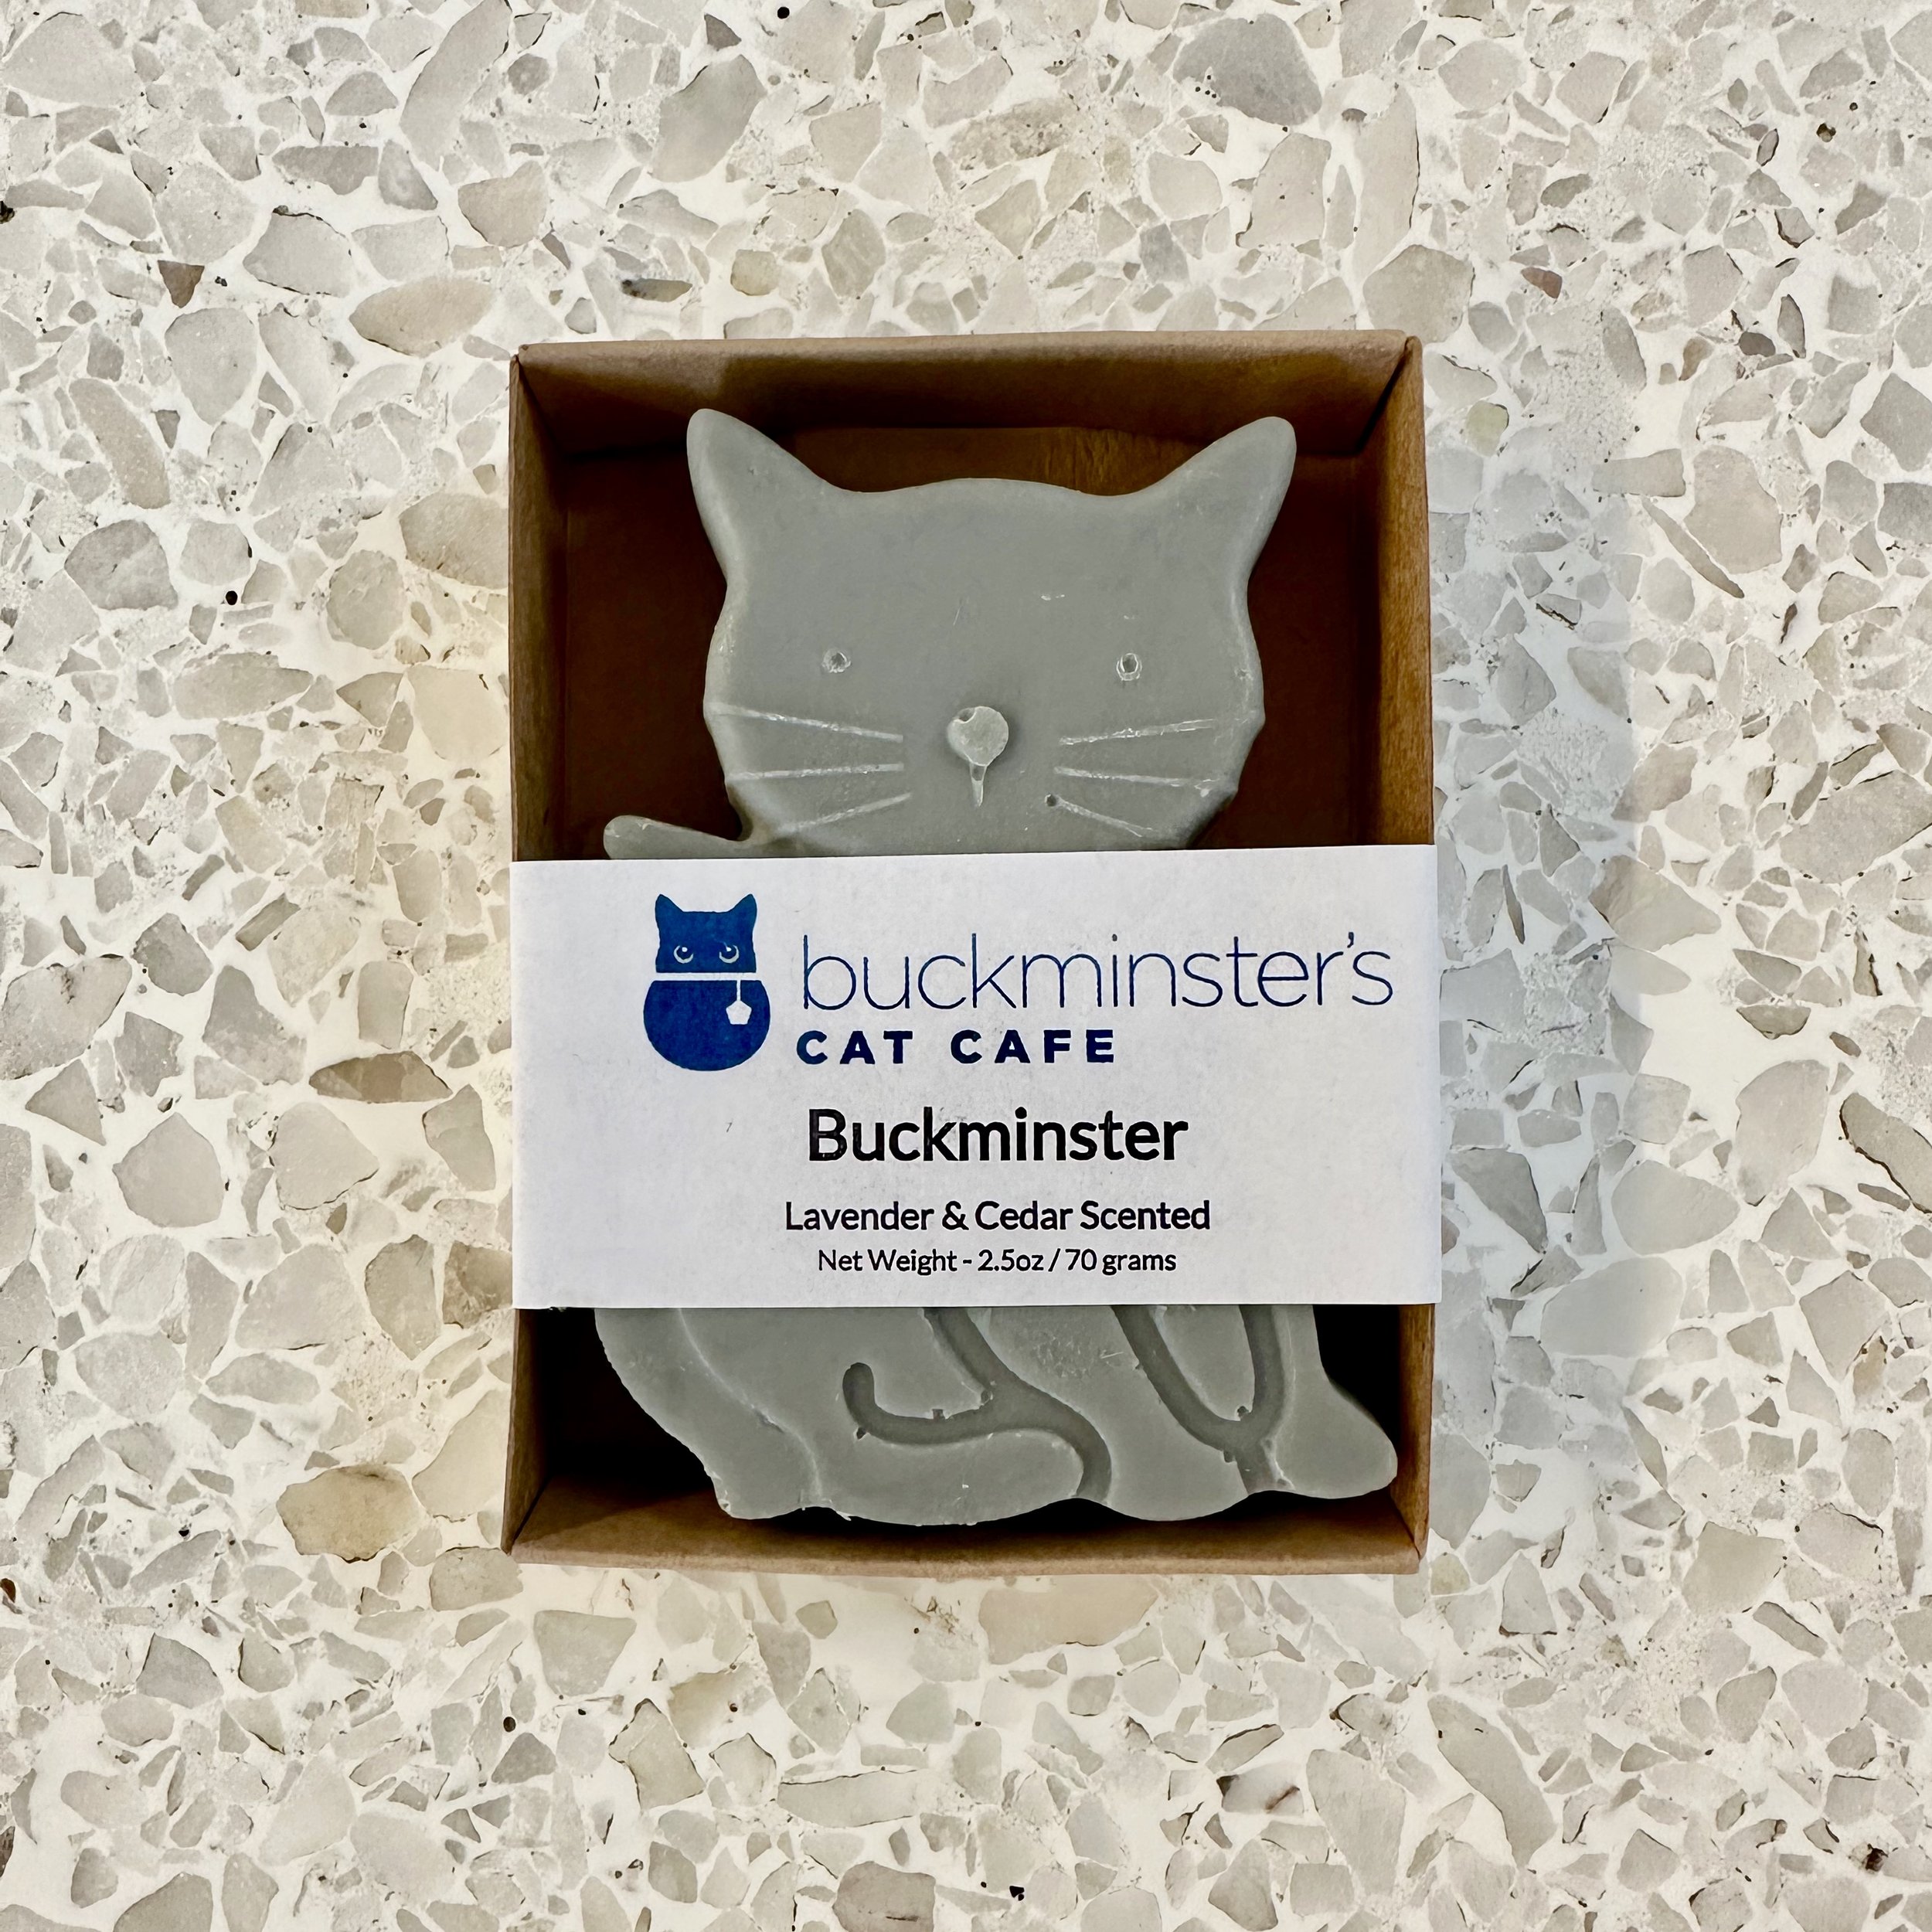 Buckminster's Tote Bag — Buckminster's Cat Cafe